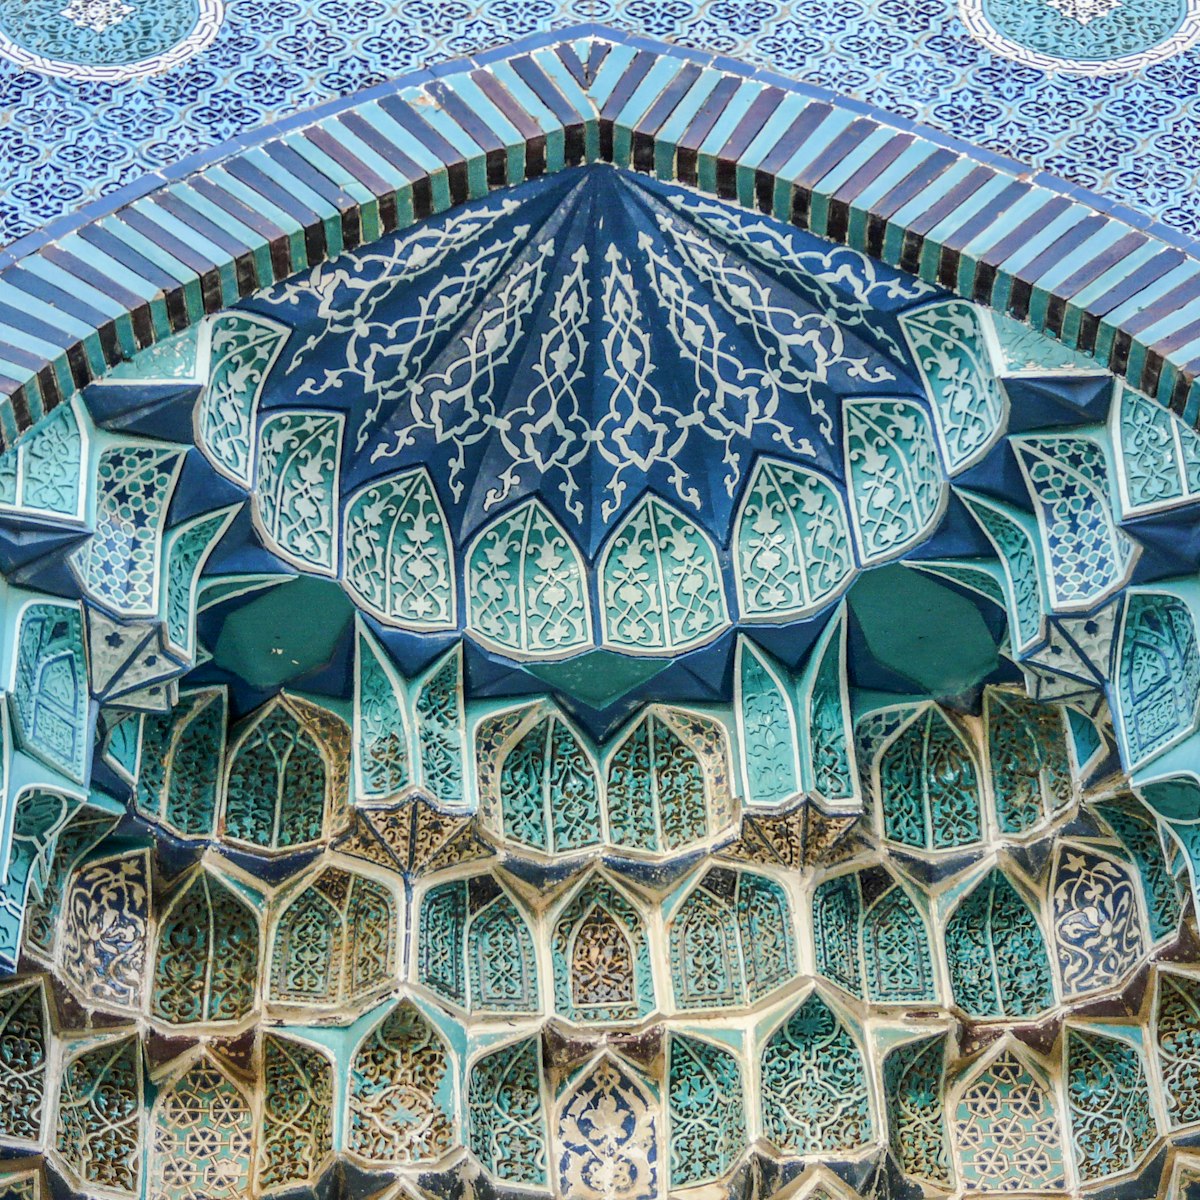 Decorative features of a mausoleum in the Shah-i-Zinda necropolis complex.
541333459
Decoration, Uzbekistan, Tile, Horizontal, Turquoise Colored, Tomb, Mausoleum, Samarkand, Close-up, Photography